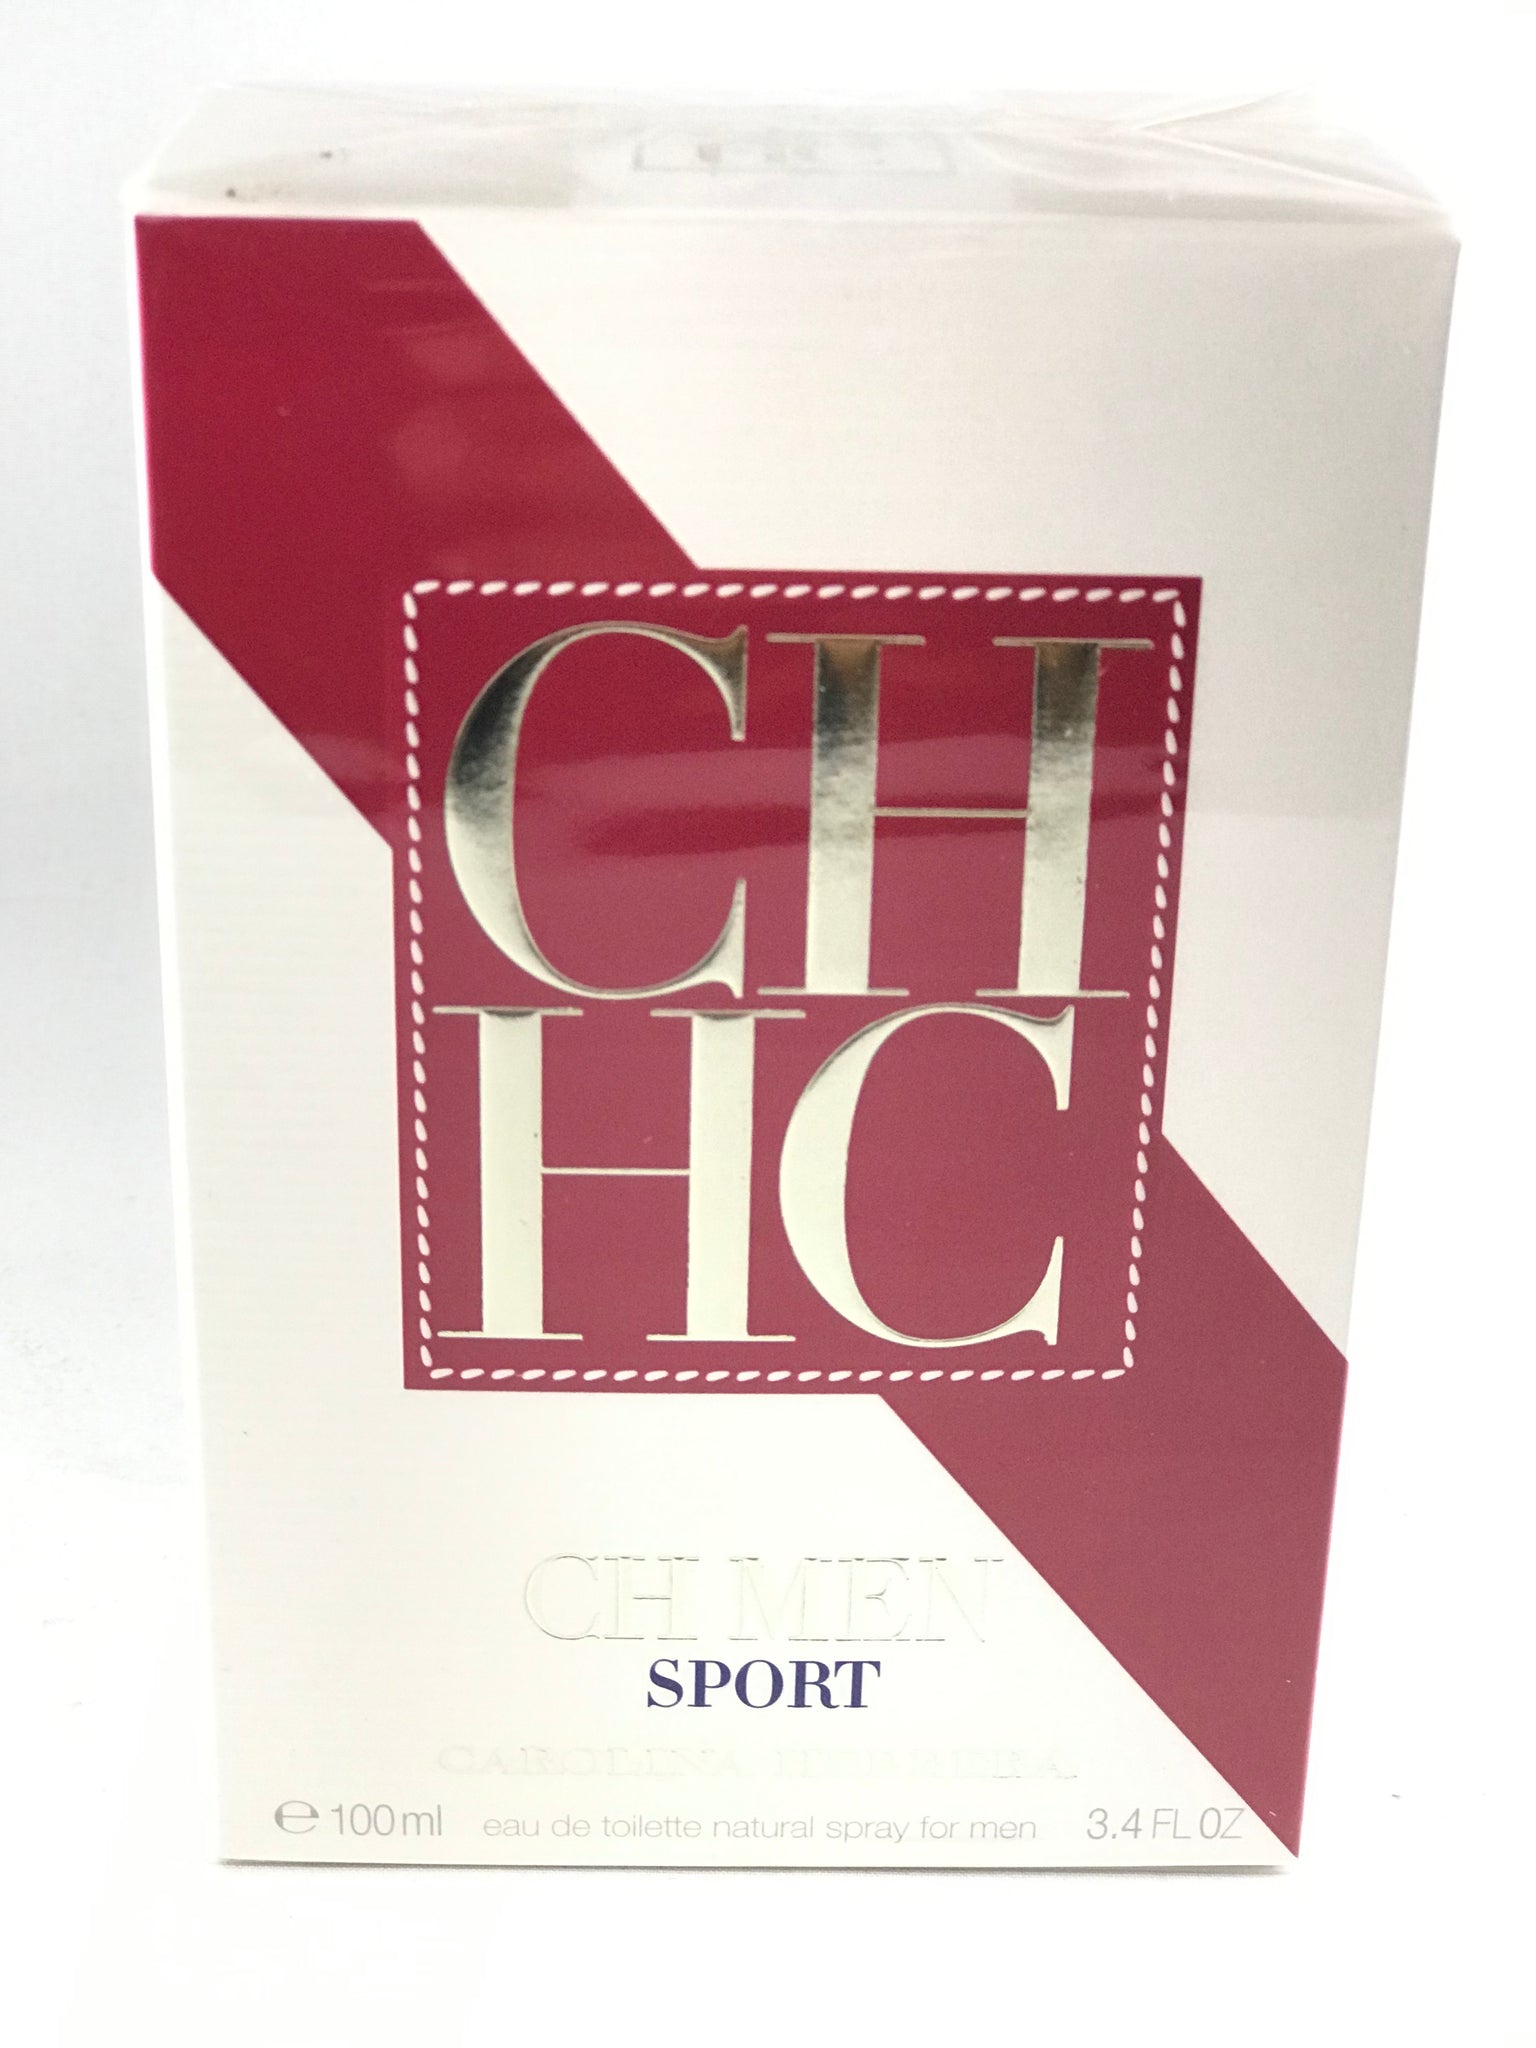 de MEN Toilette always perfumes Herrera CH Carolina & 3.4oz special SPORT gifts – Eau